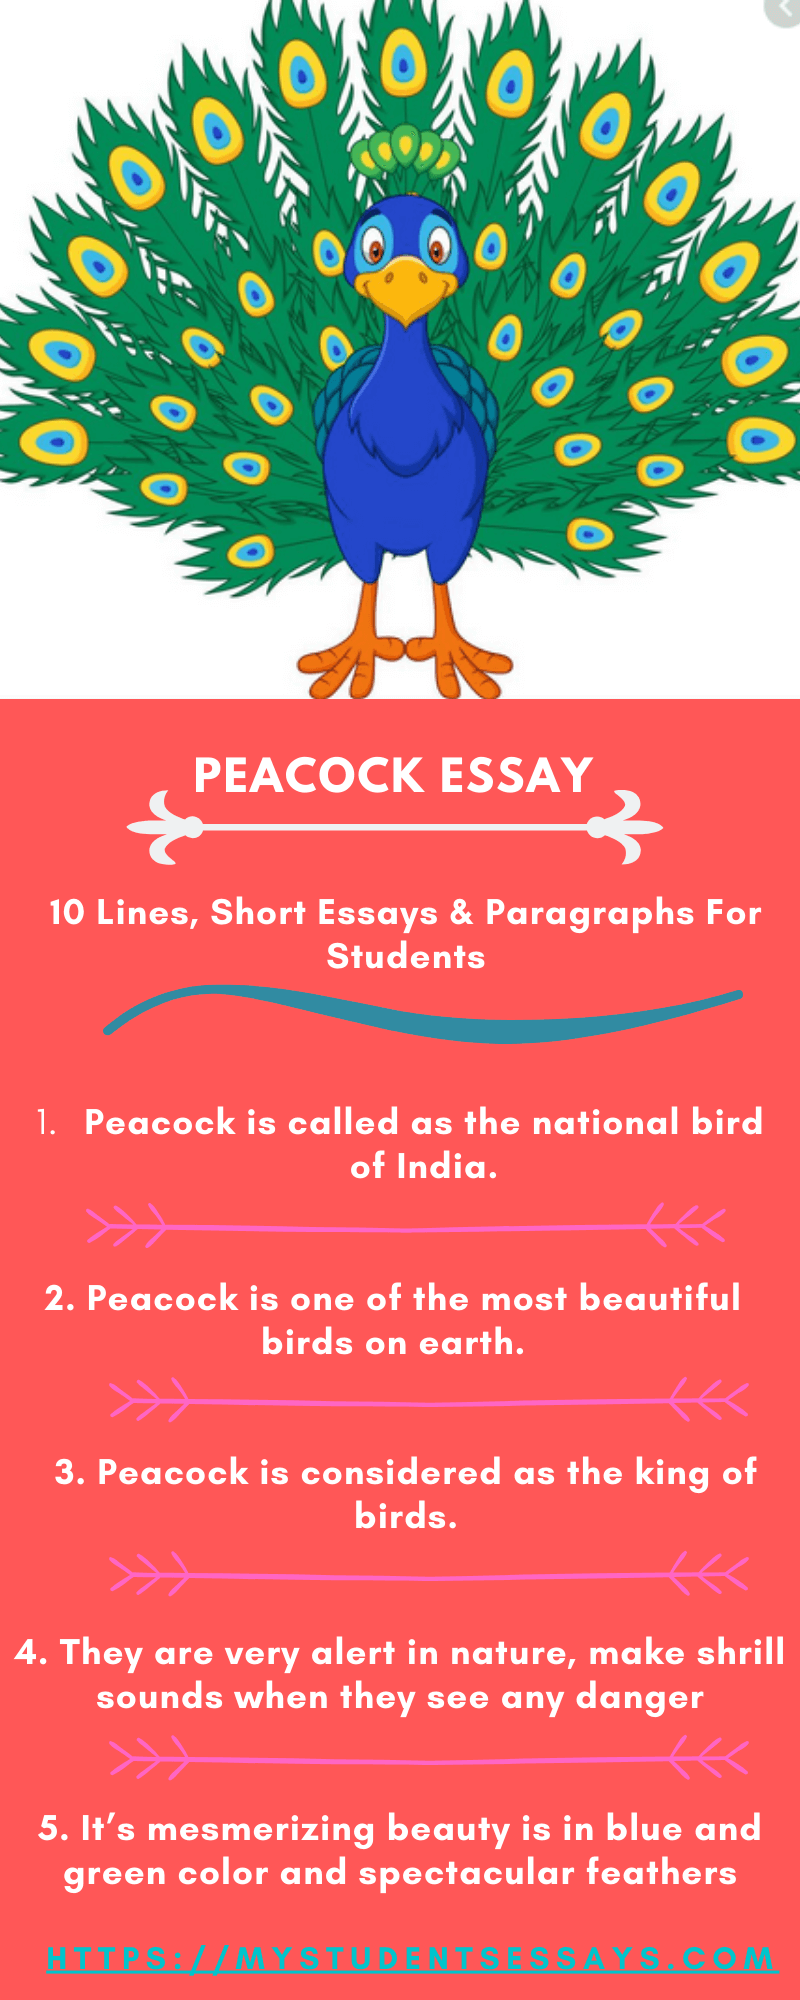 Peacock essay for children, National bird of India essay, qualities, ten lines for kids